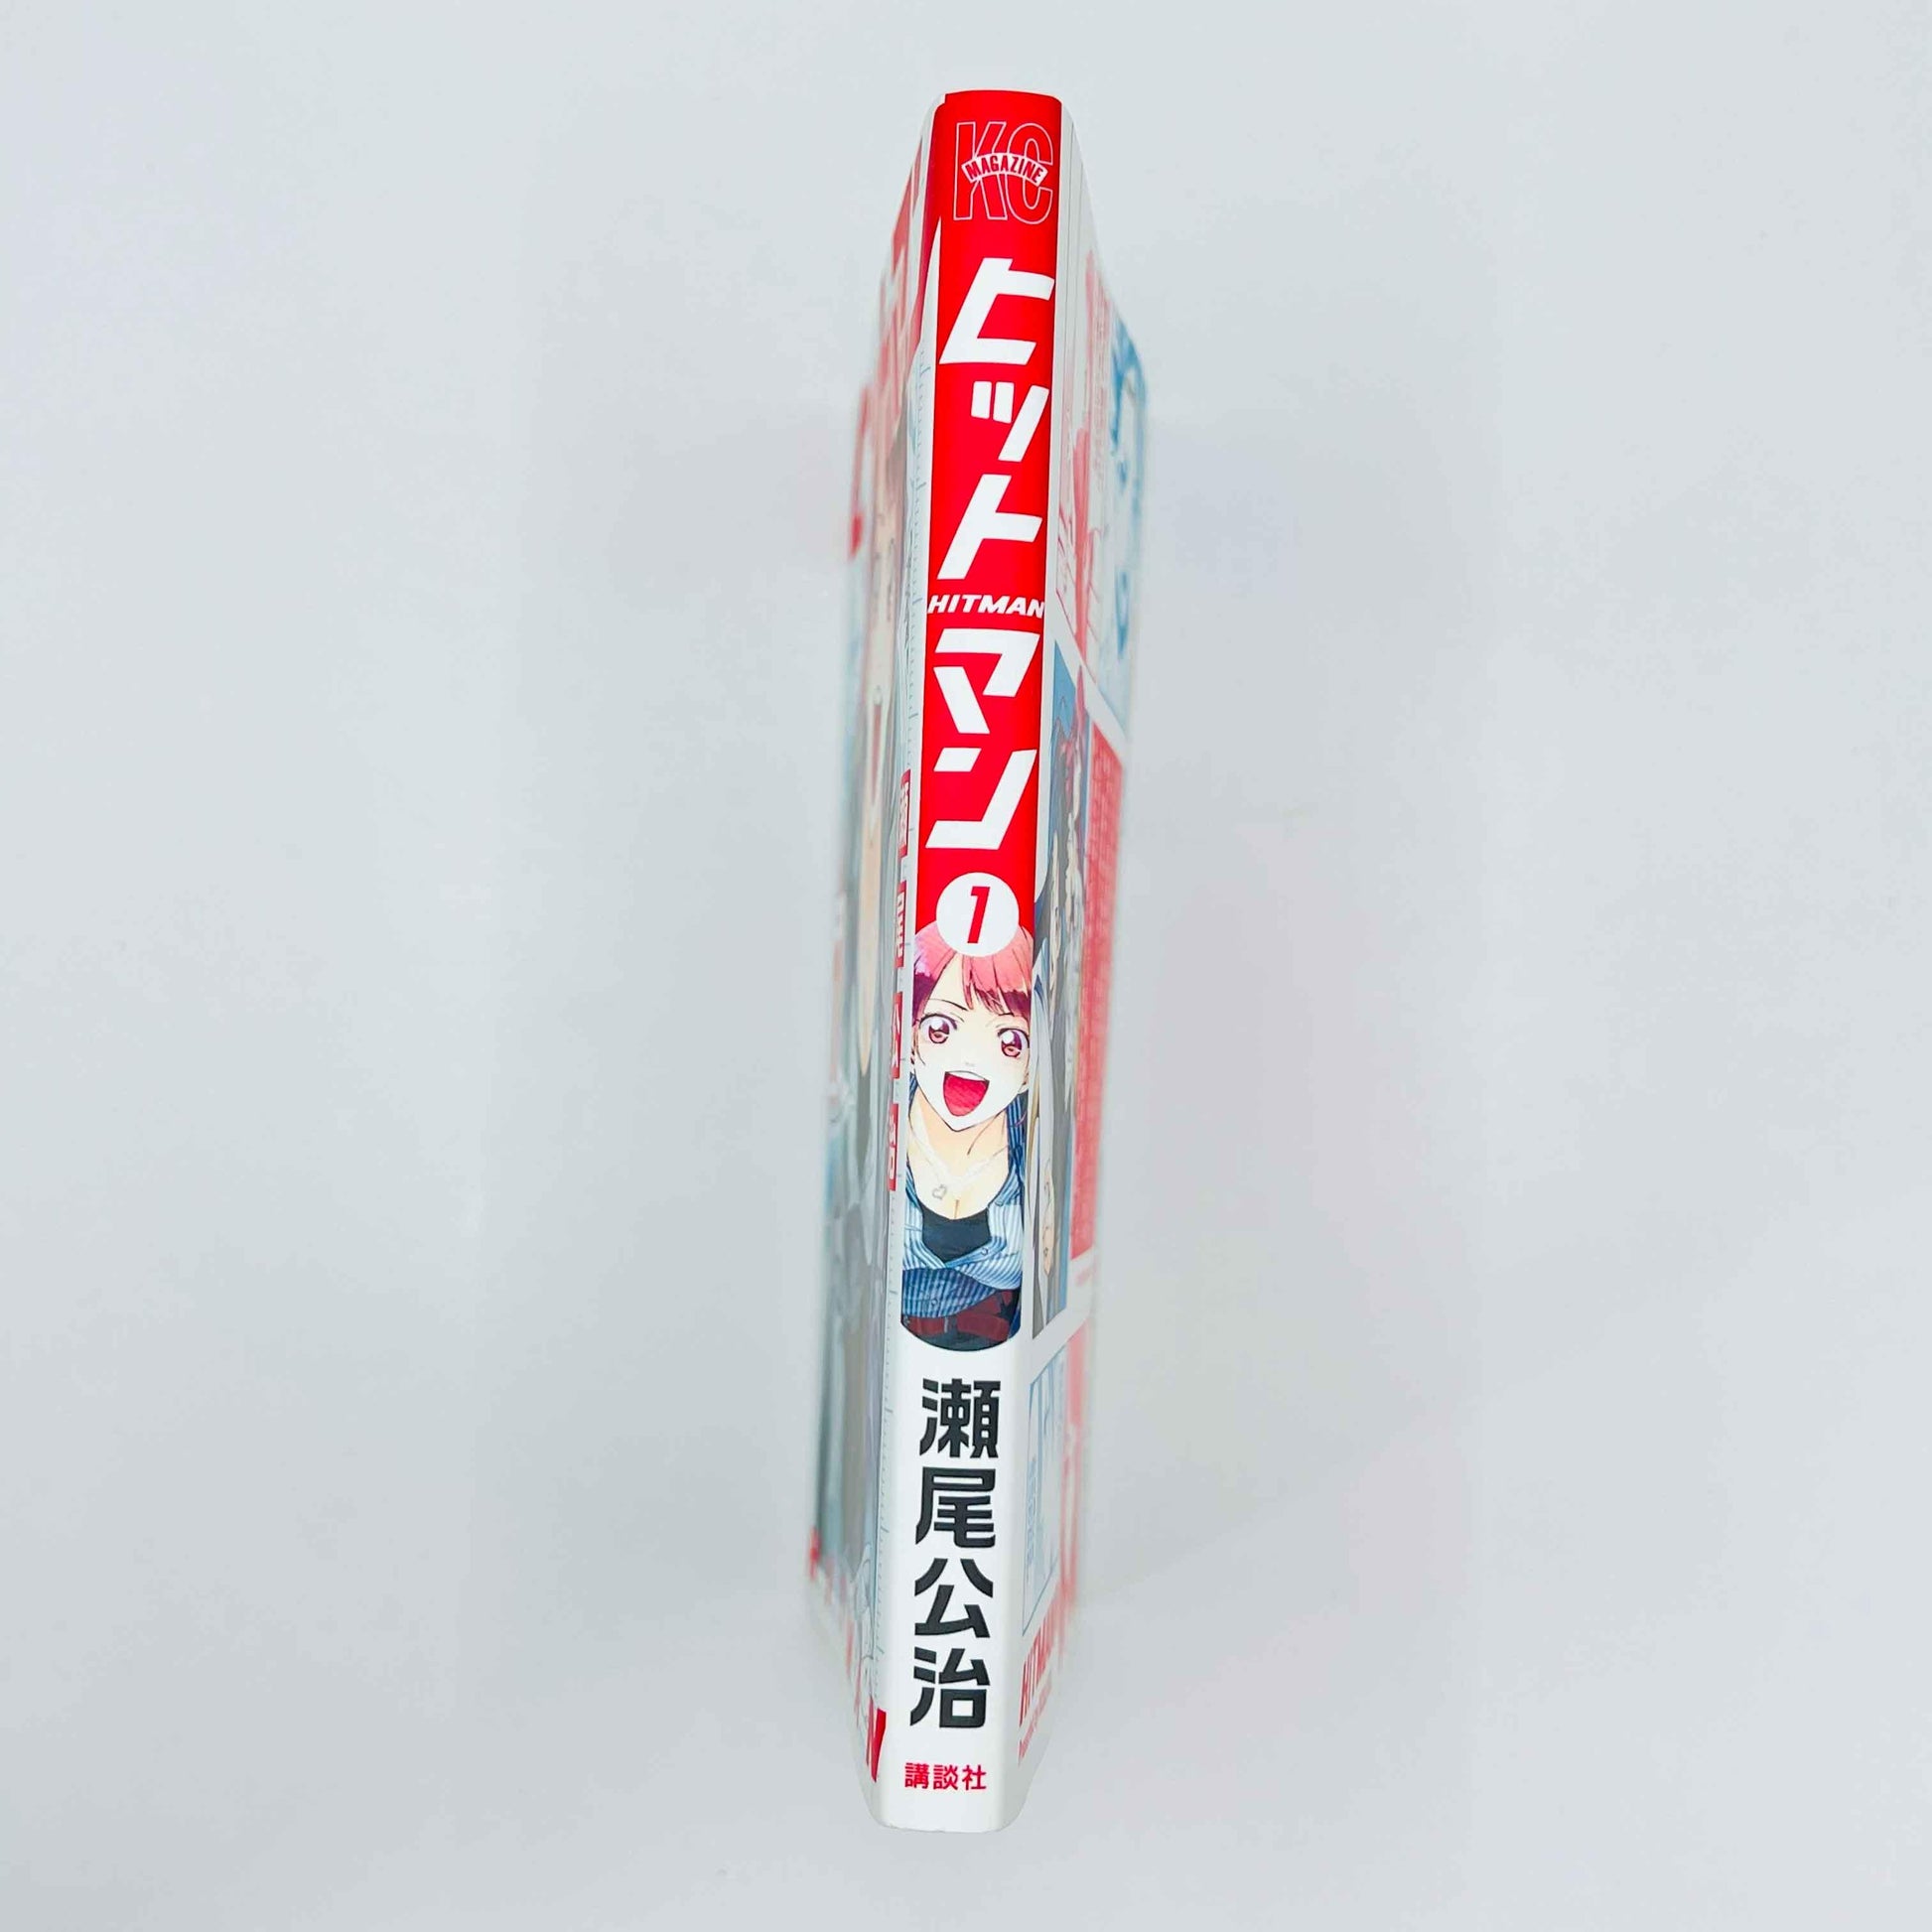 Hitman - Volume 01 - 1stPrint.net - 1st First Print Edition Manga Store - M-HITMAN-01-001